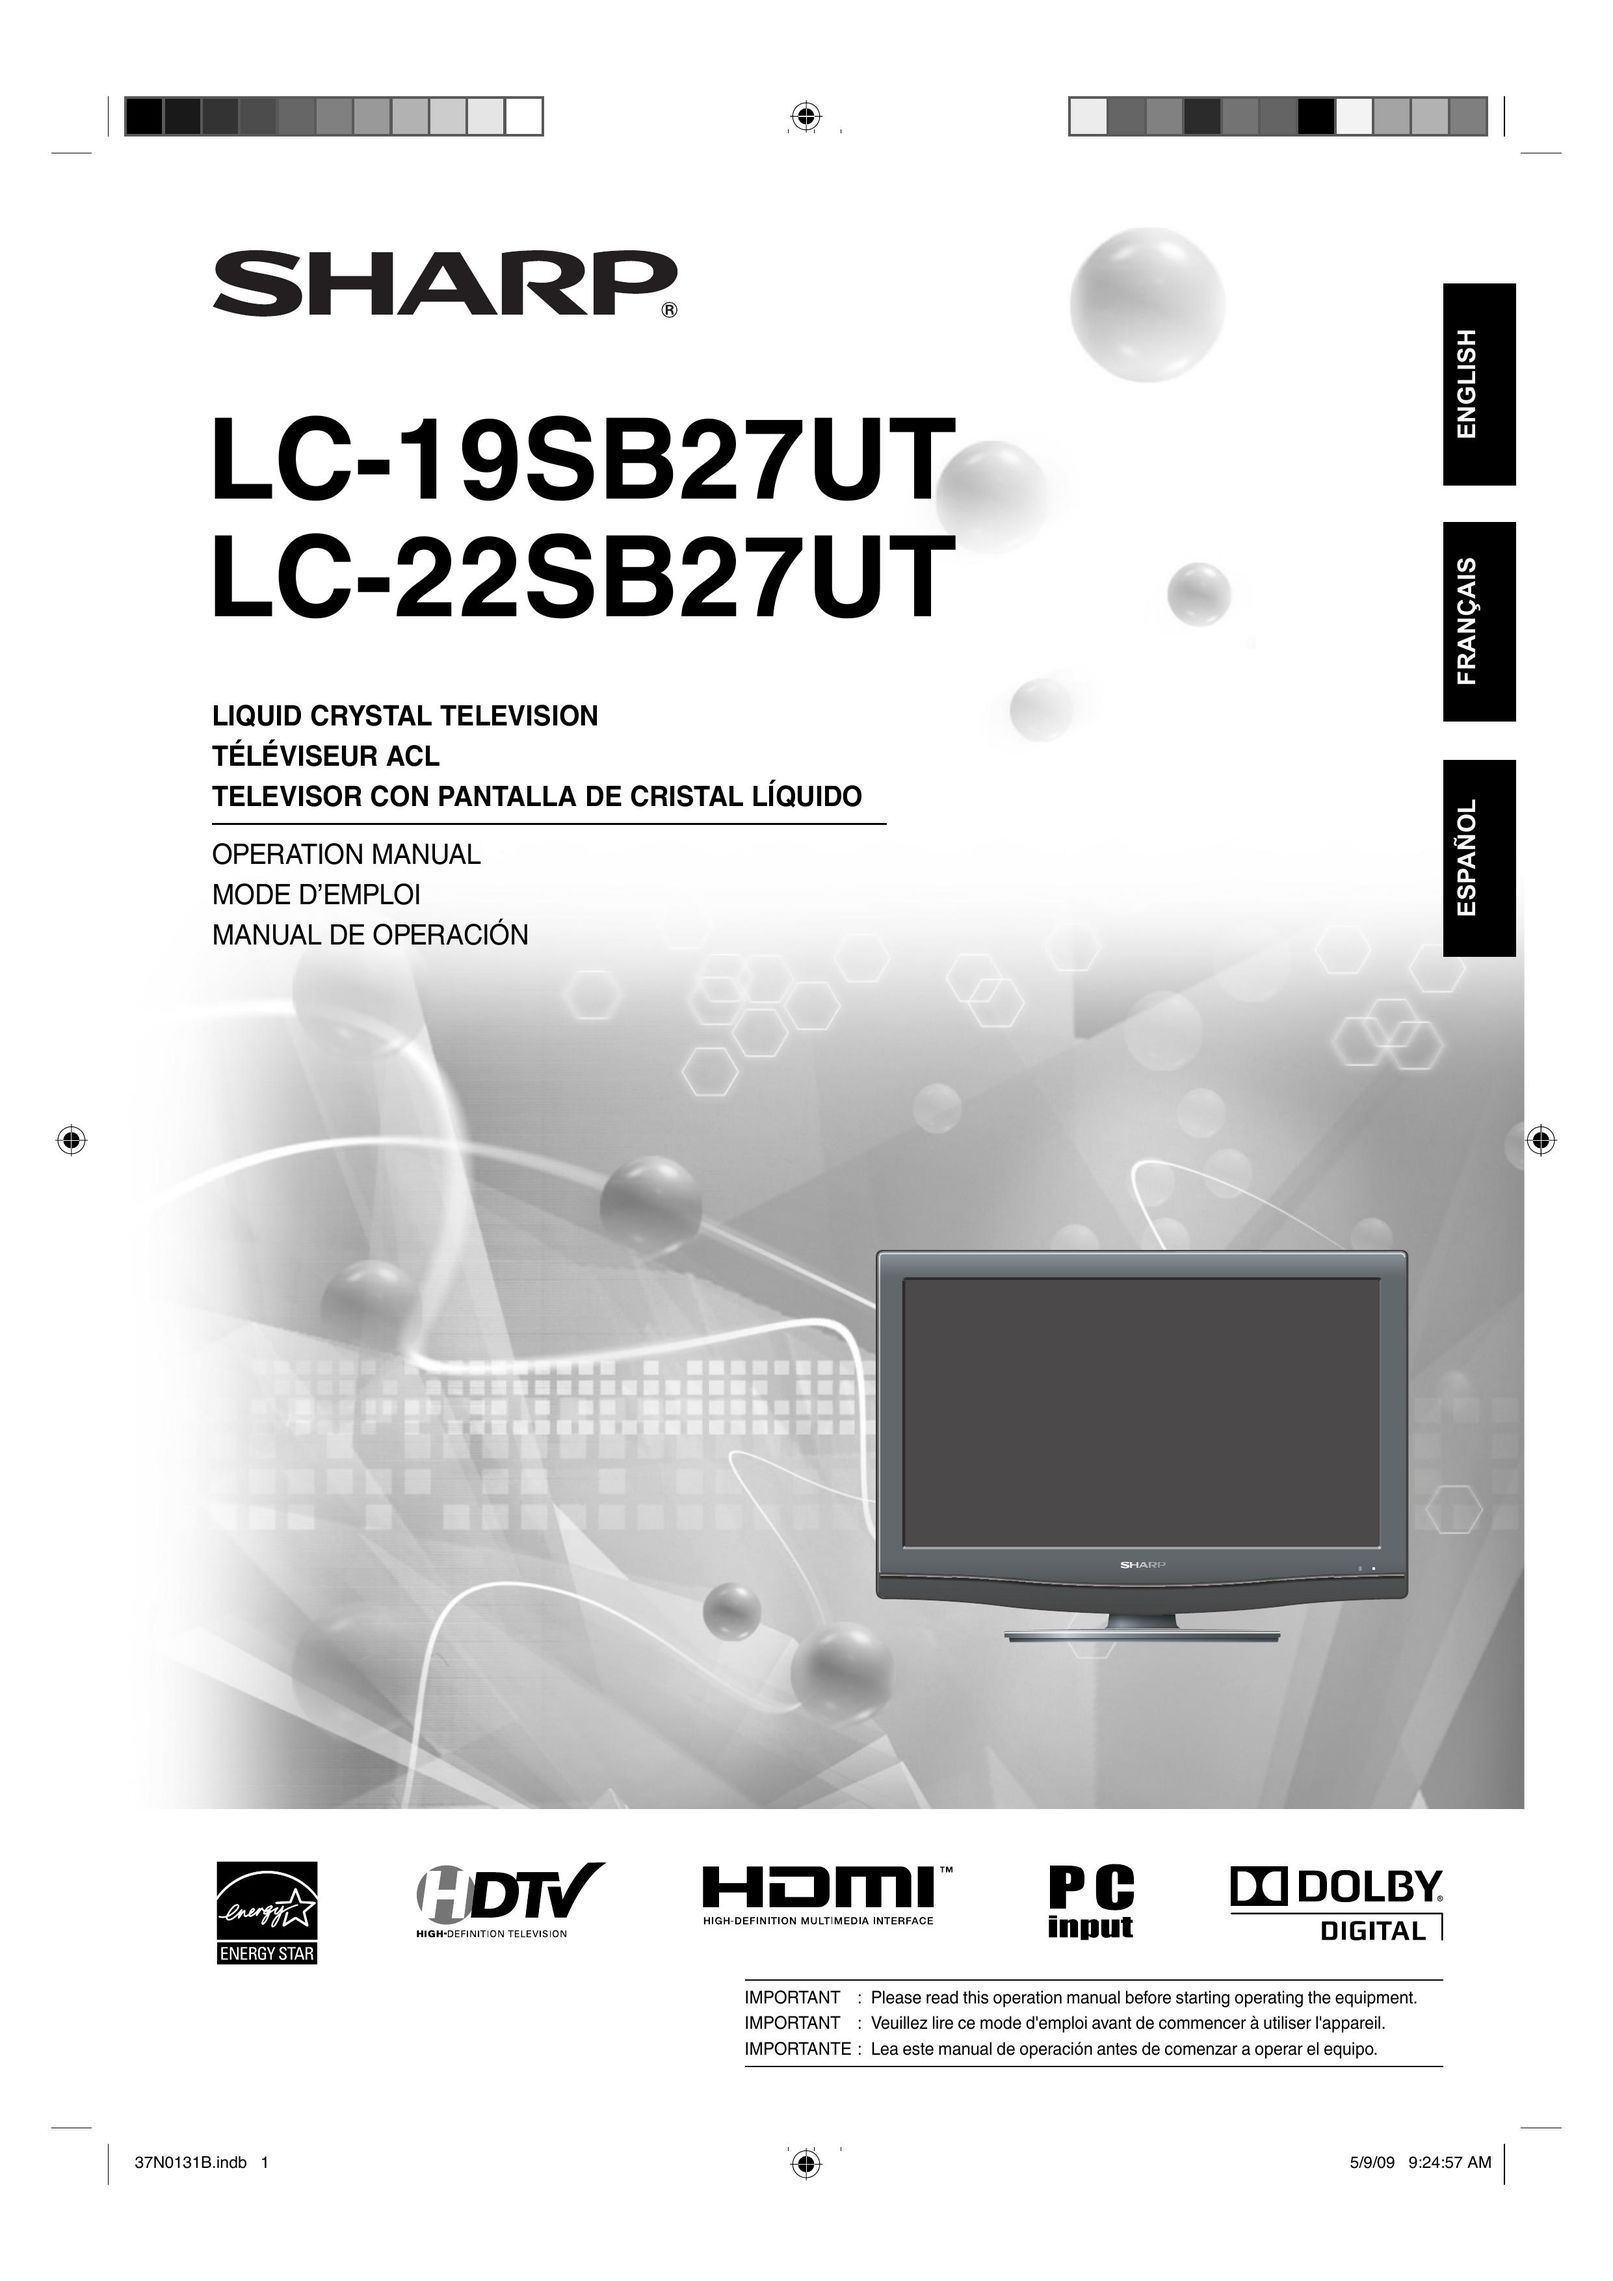 Sharp LC 19SB27UT Flat Panel Television User Manual